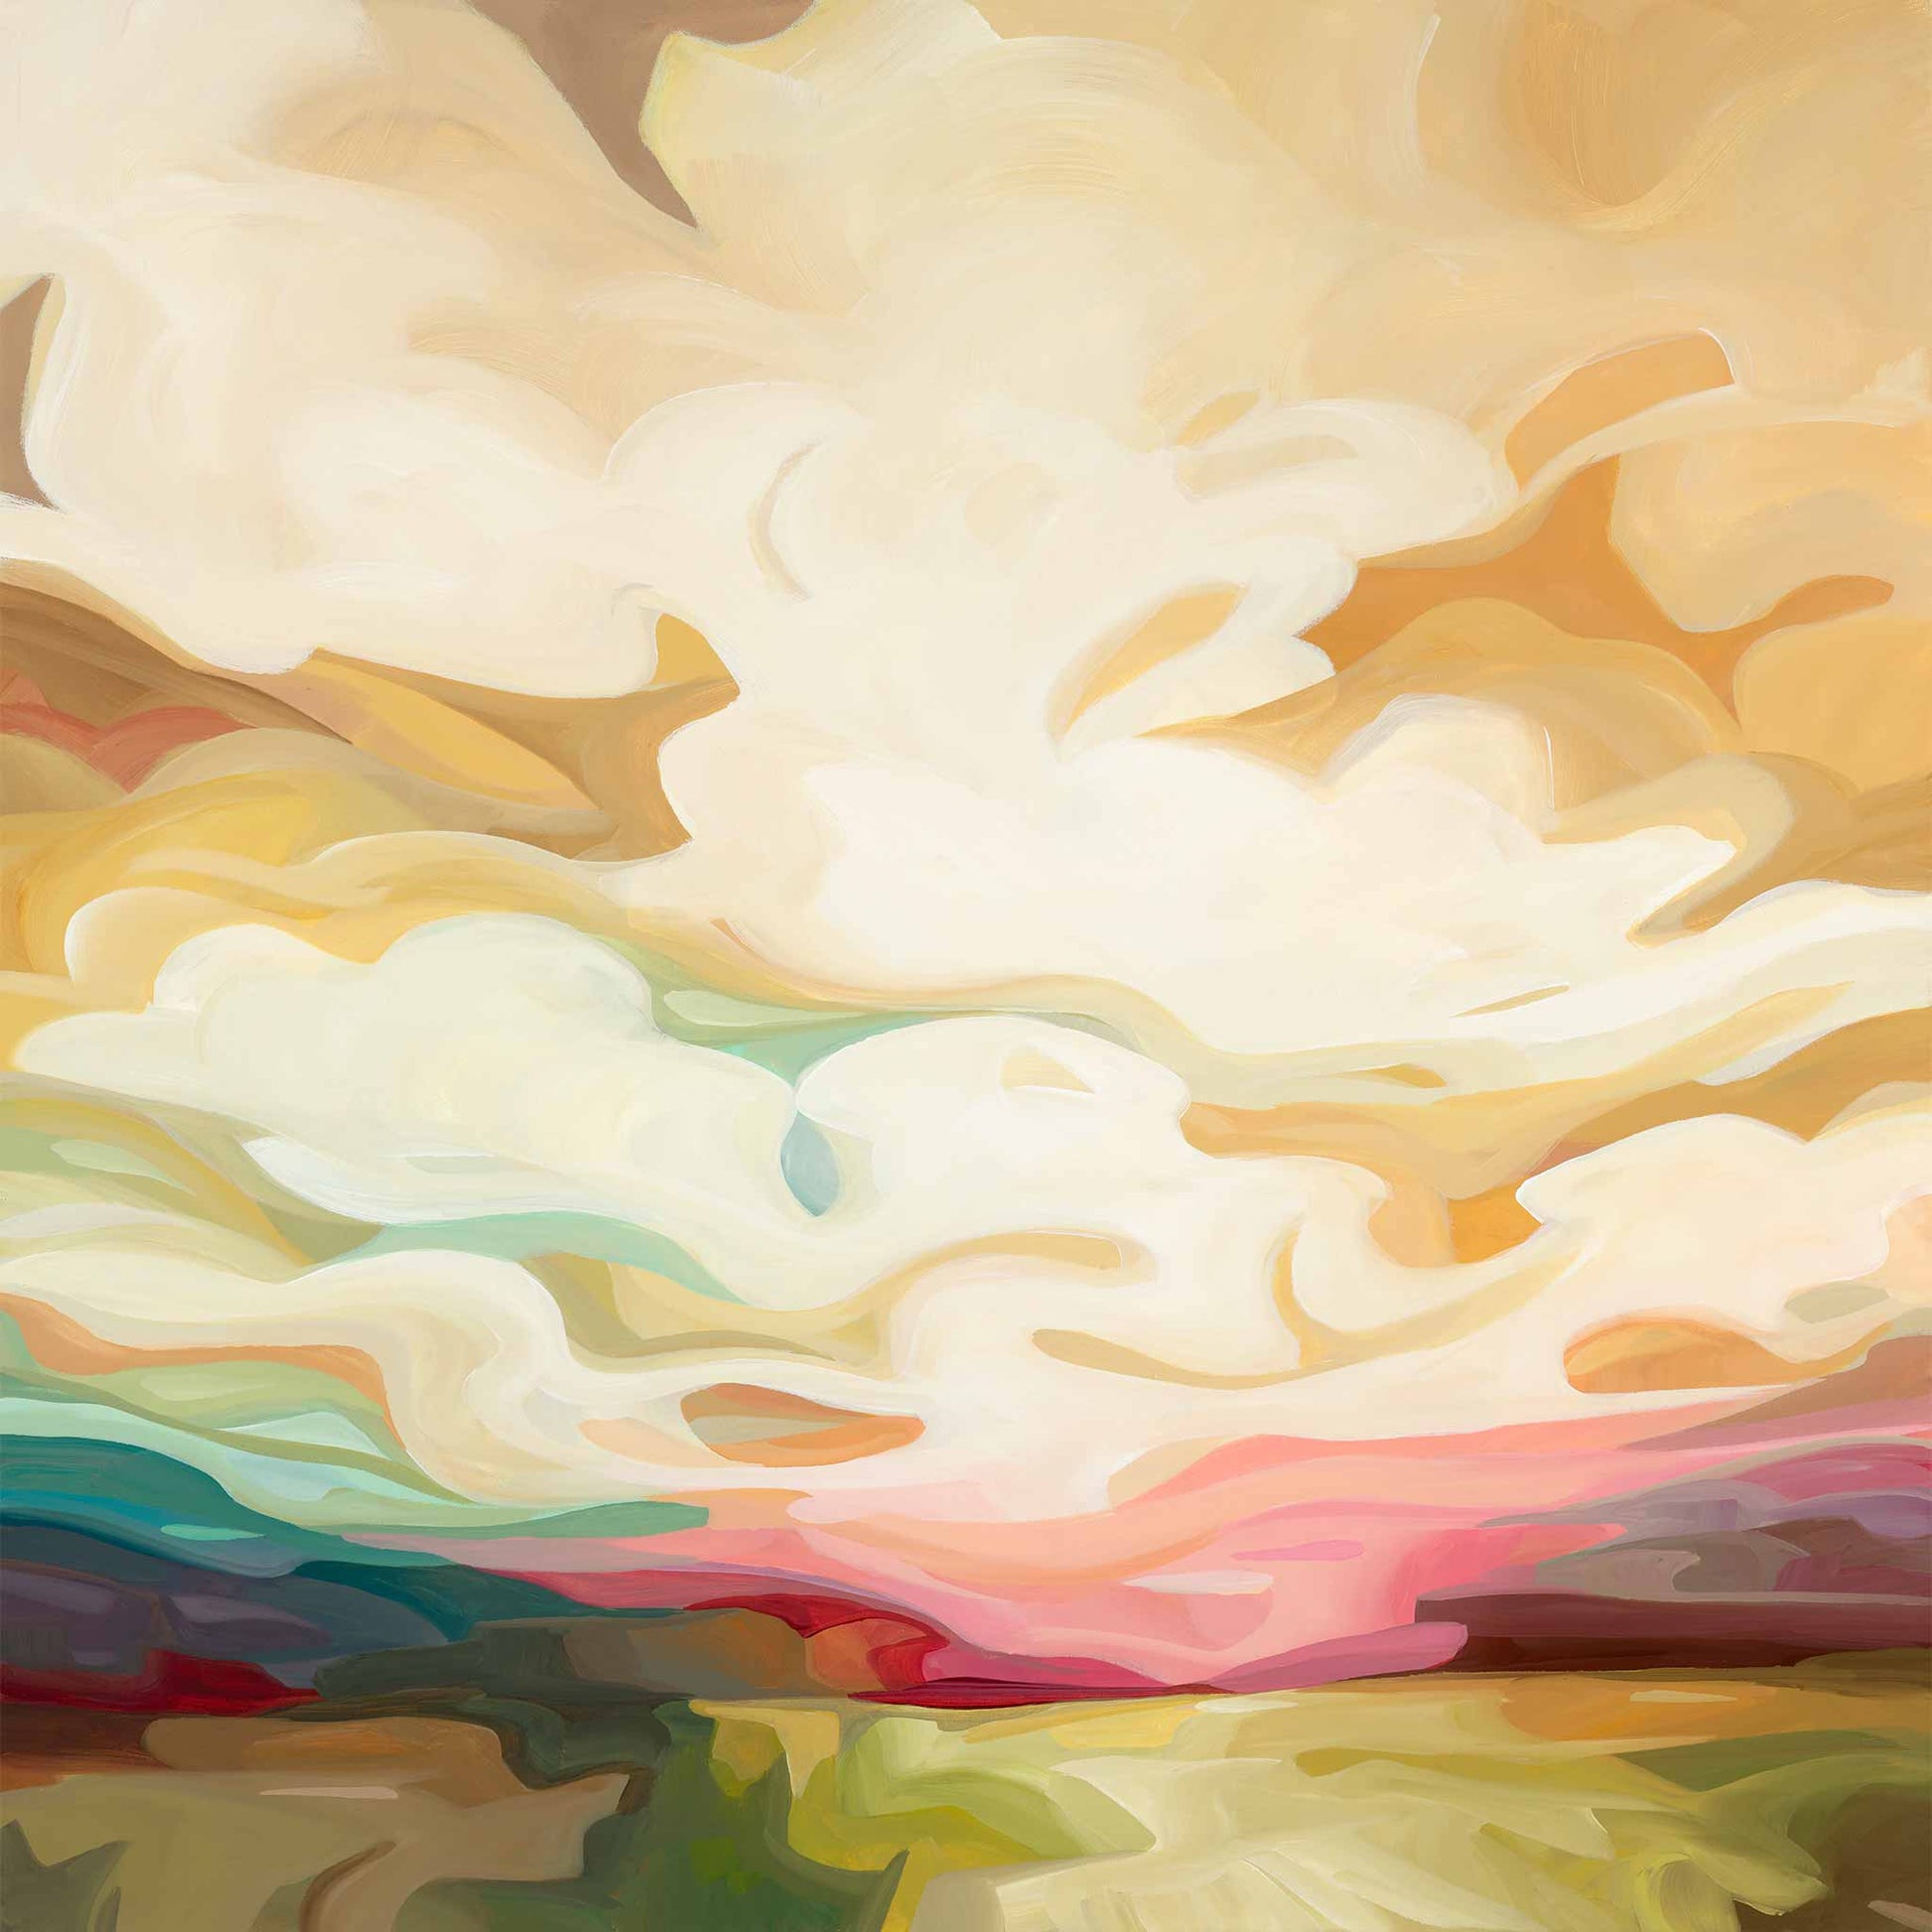 acrylic sky painting print of a golden morning sunrise sky by Canadian artist Susannah Bleasby